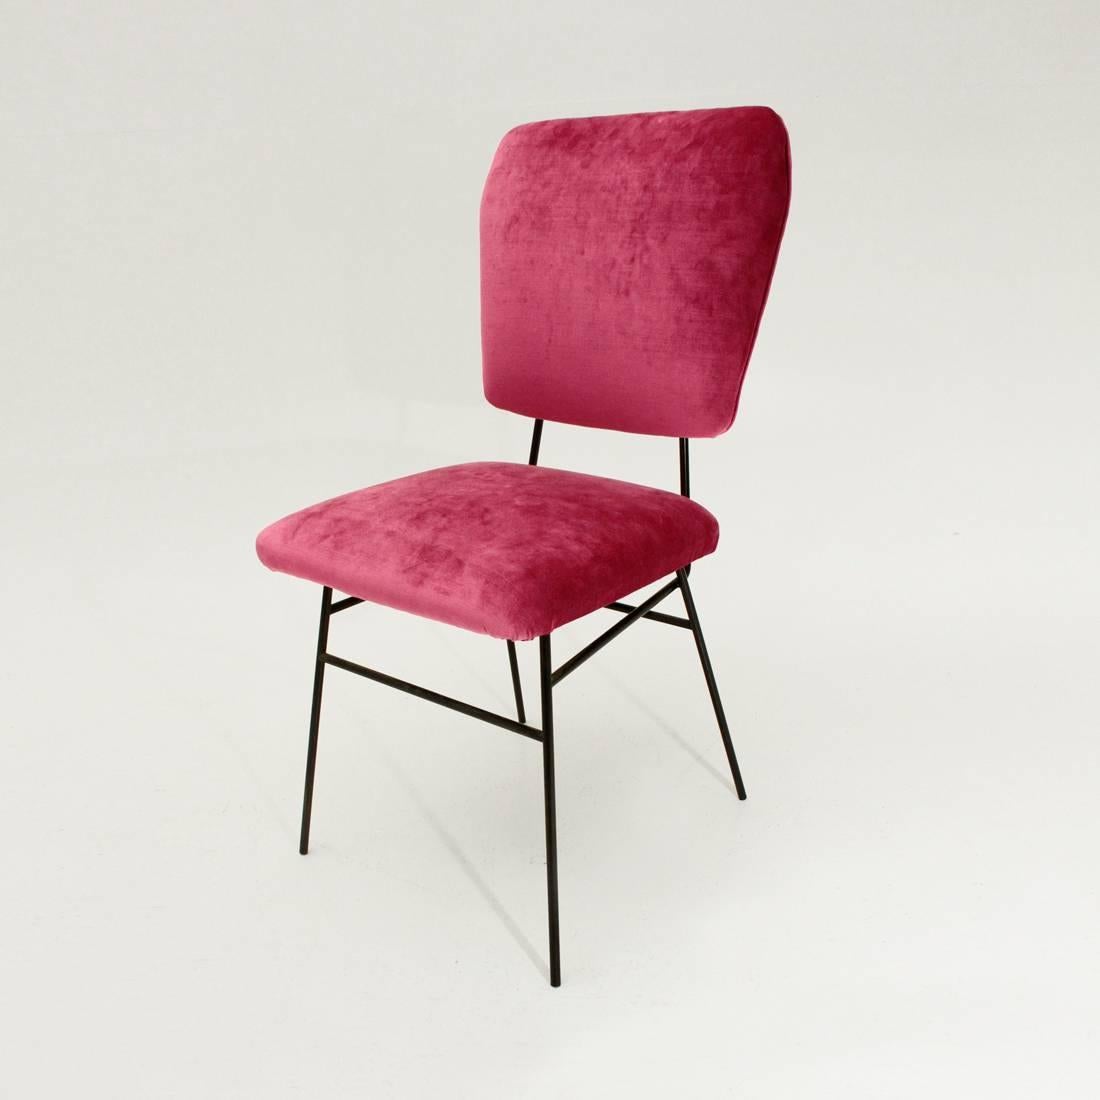 Mid-20th Century Italian Pink Velvet Chair, 1950s